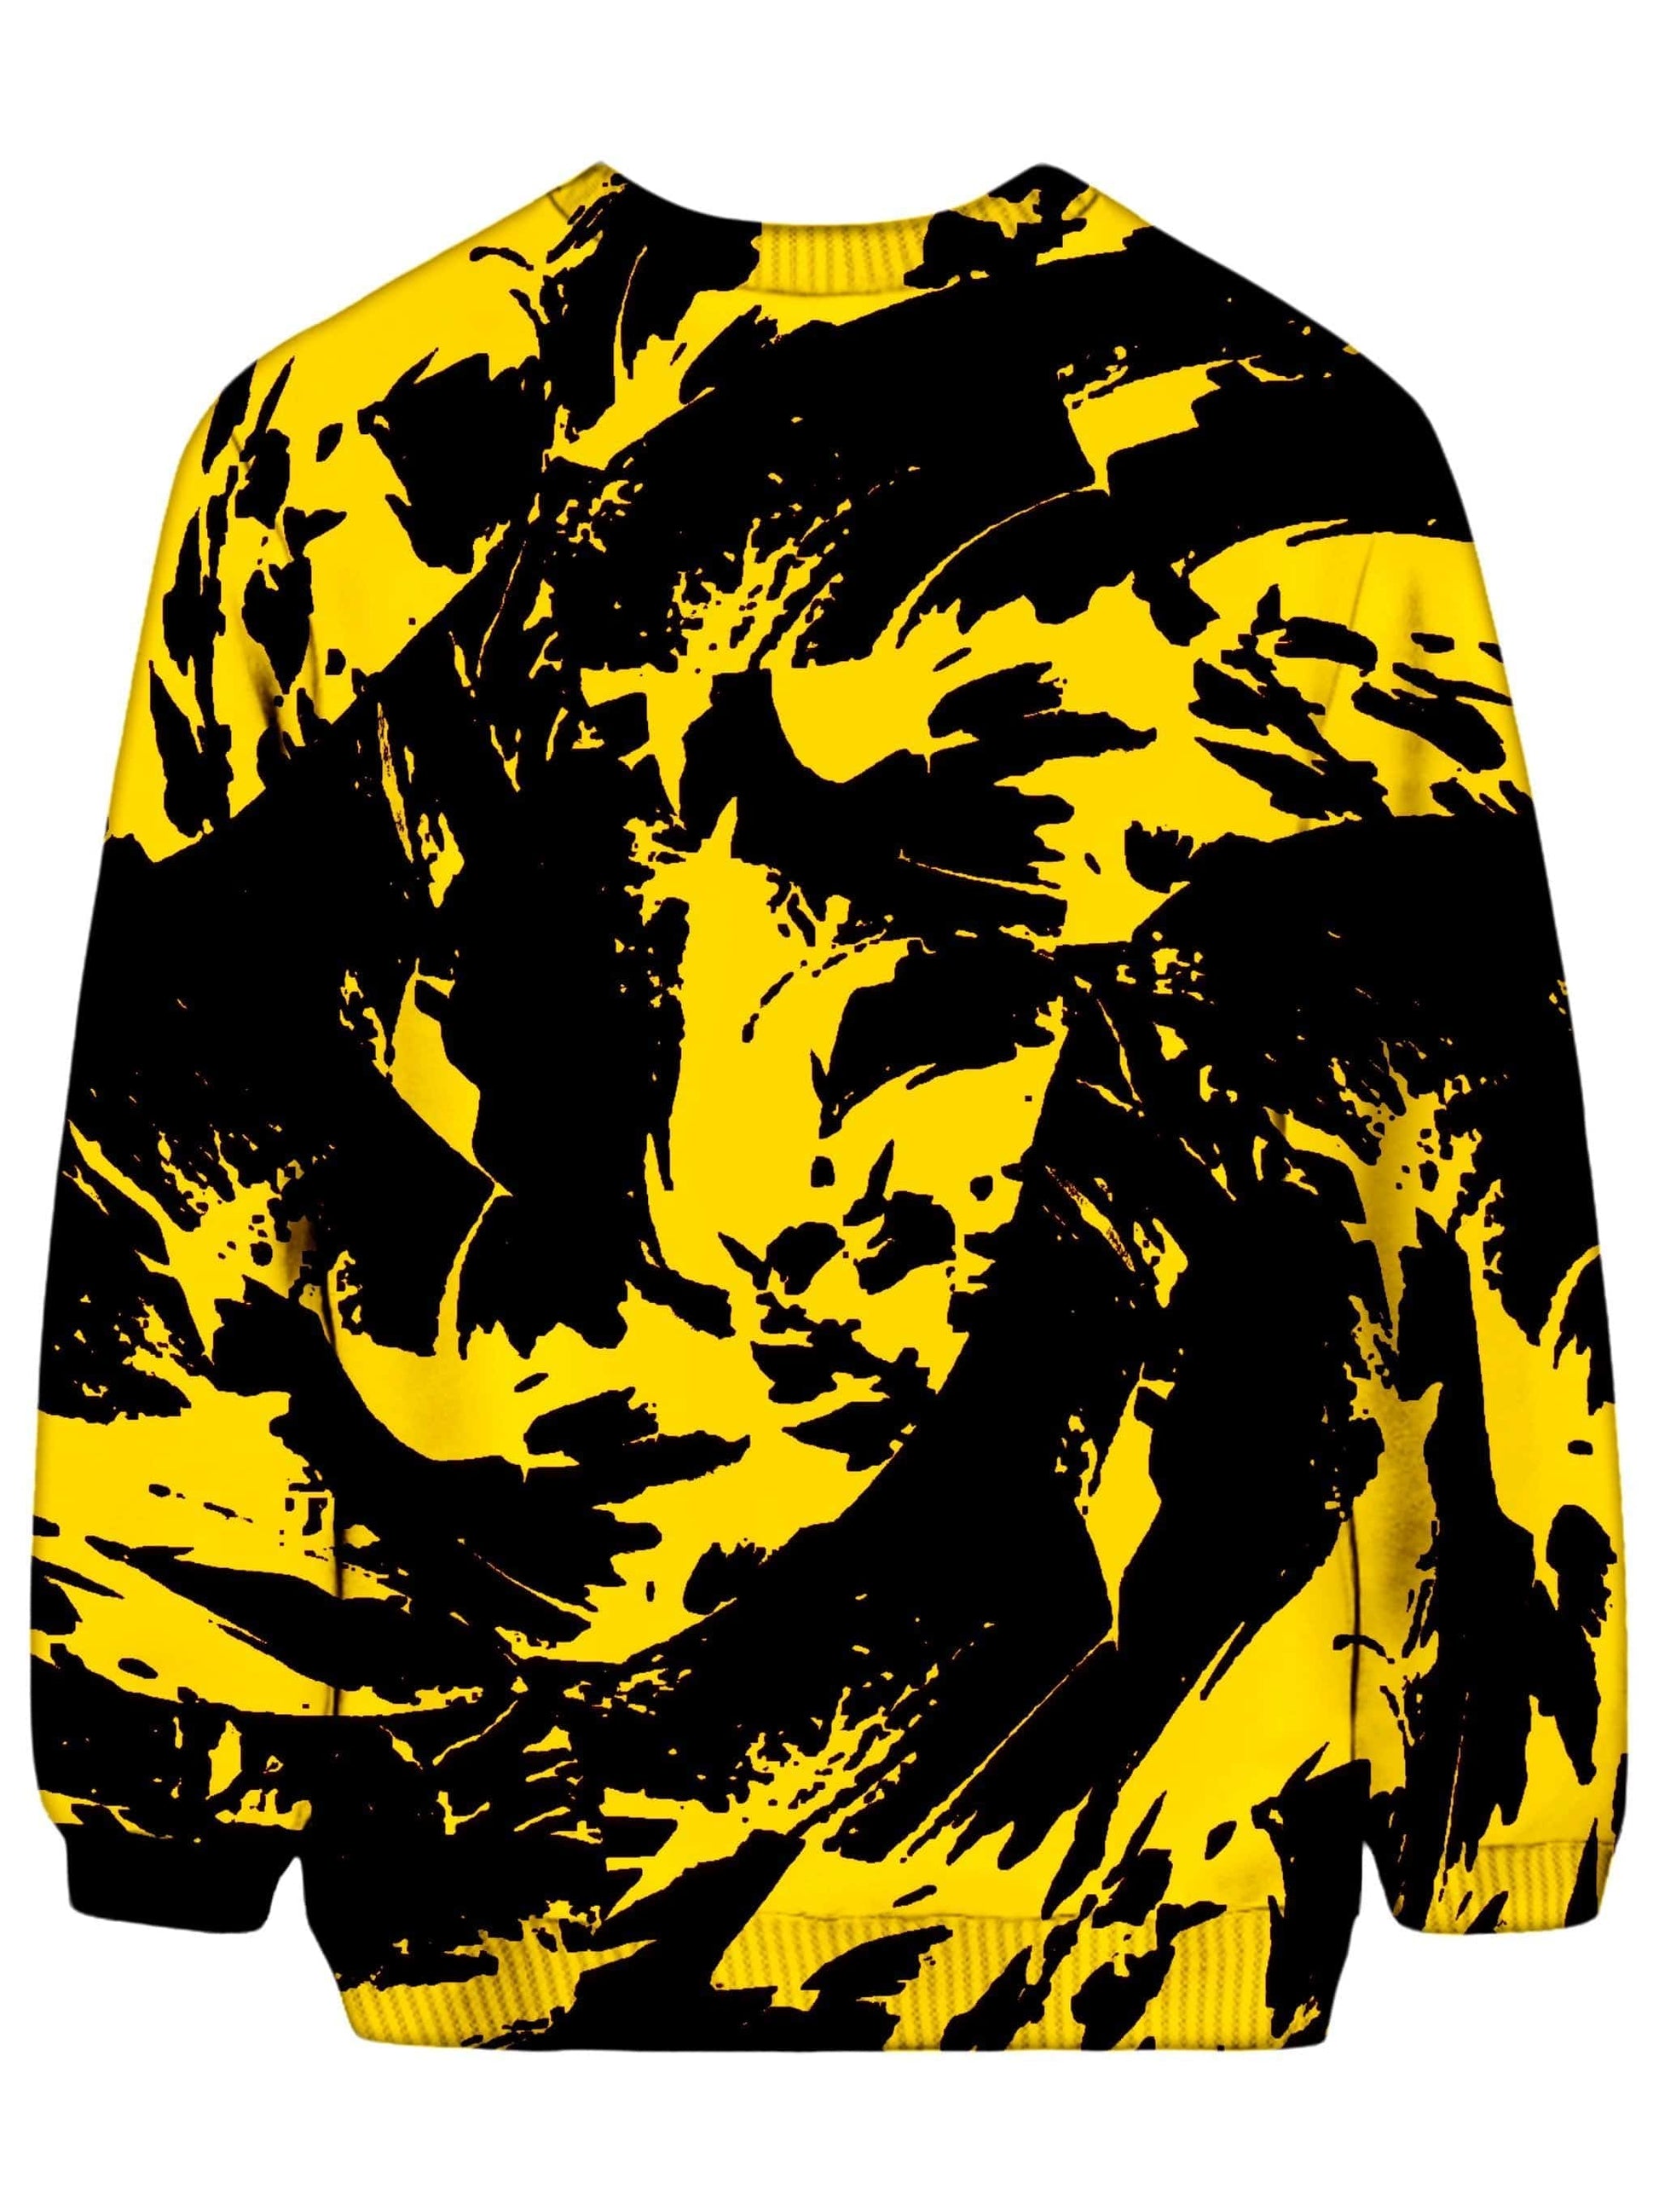 Black and Yellow Paint Splatter Sweatshirt, Big Tex Funkadelic, | iEDM